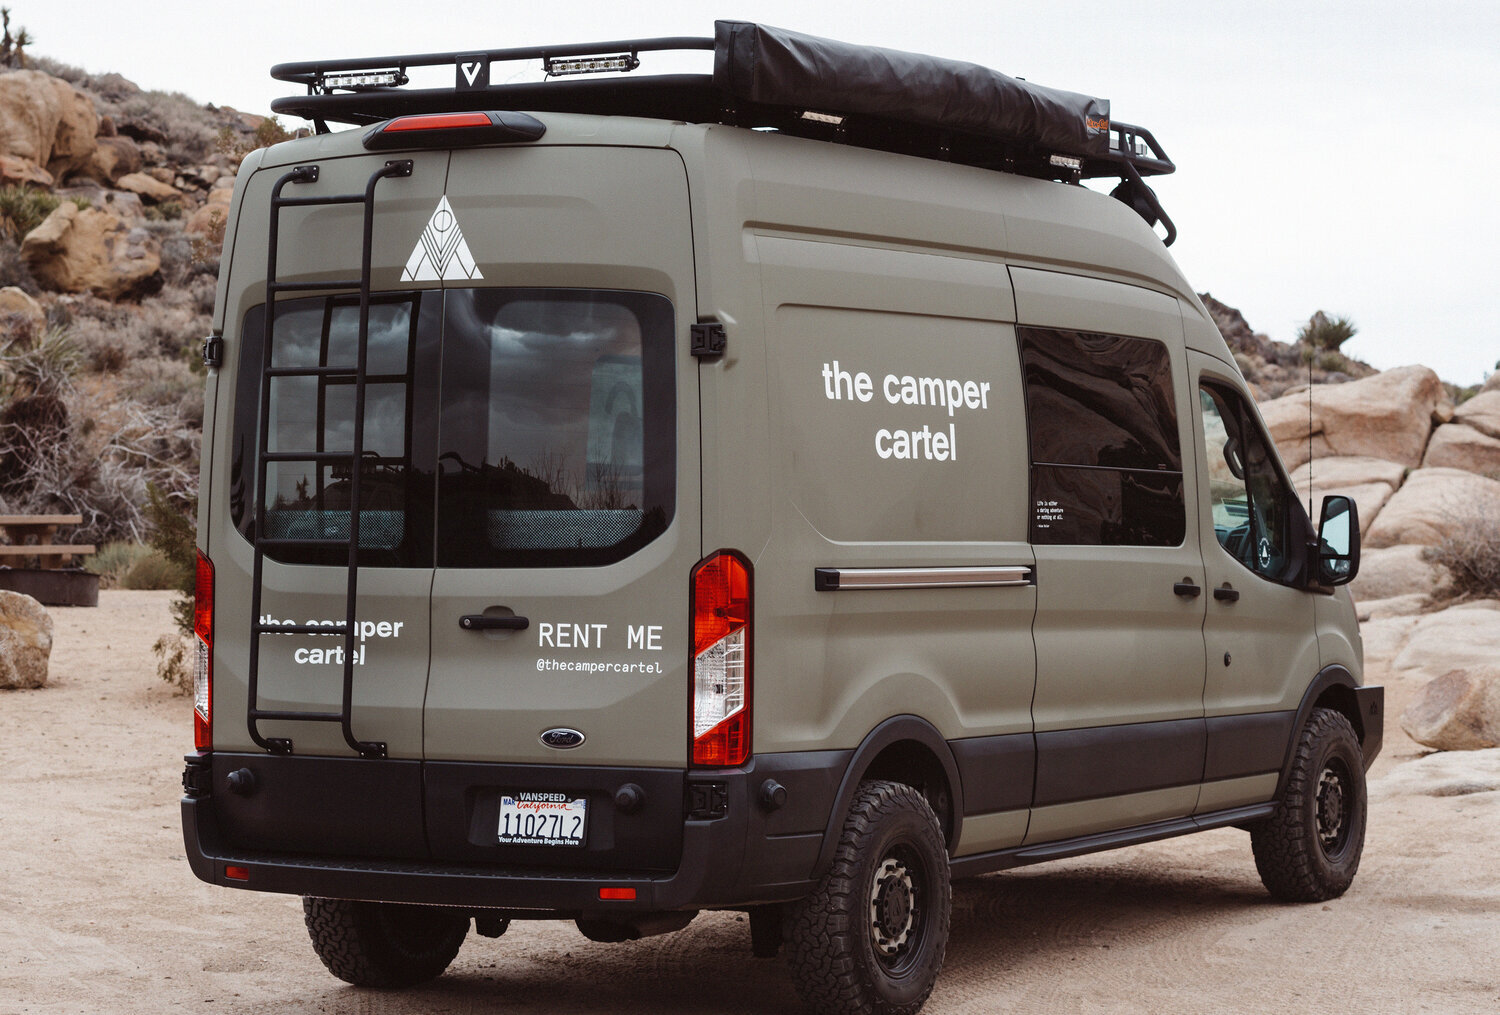 s-california-classic-18-ford-transit-campervan-camper-cartel-external-rear.jpg